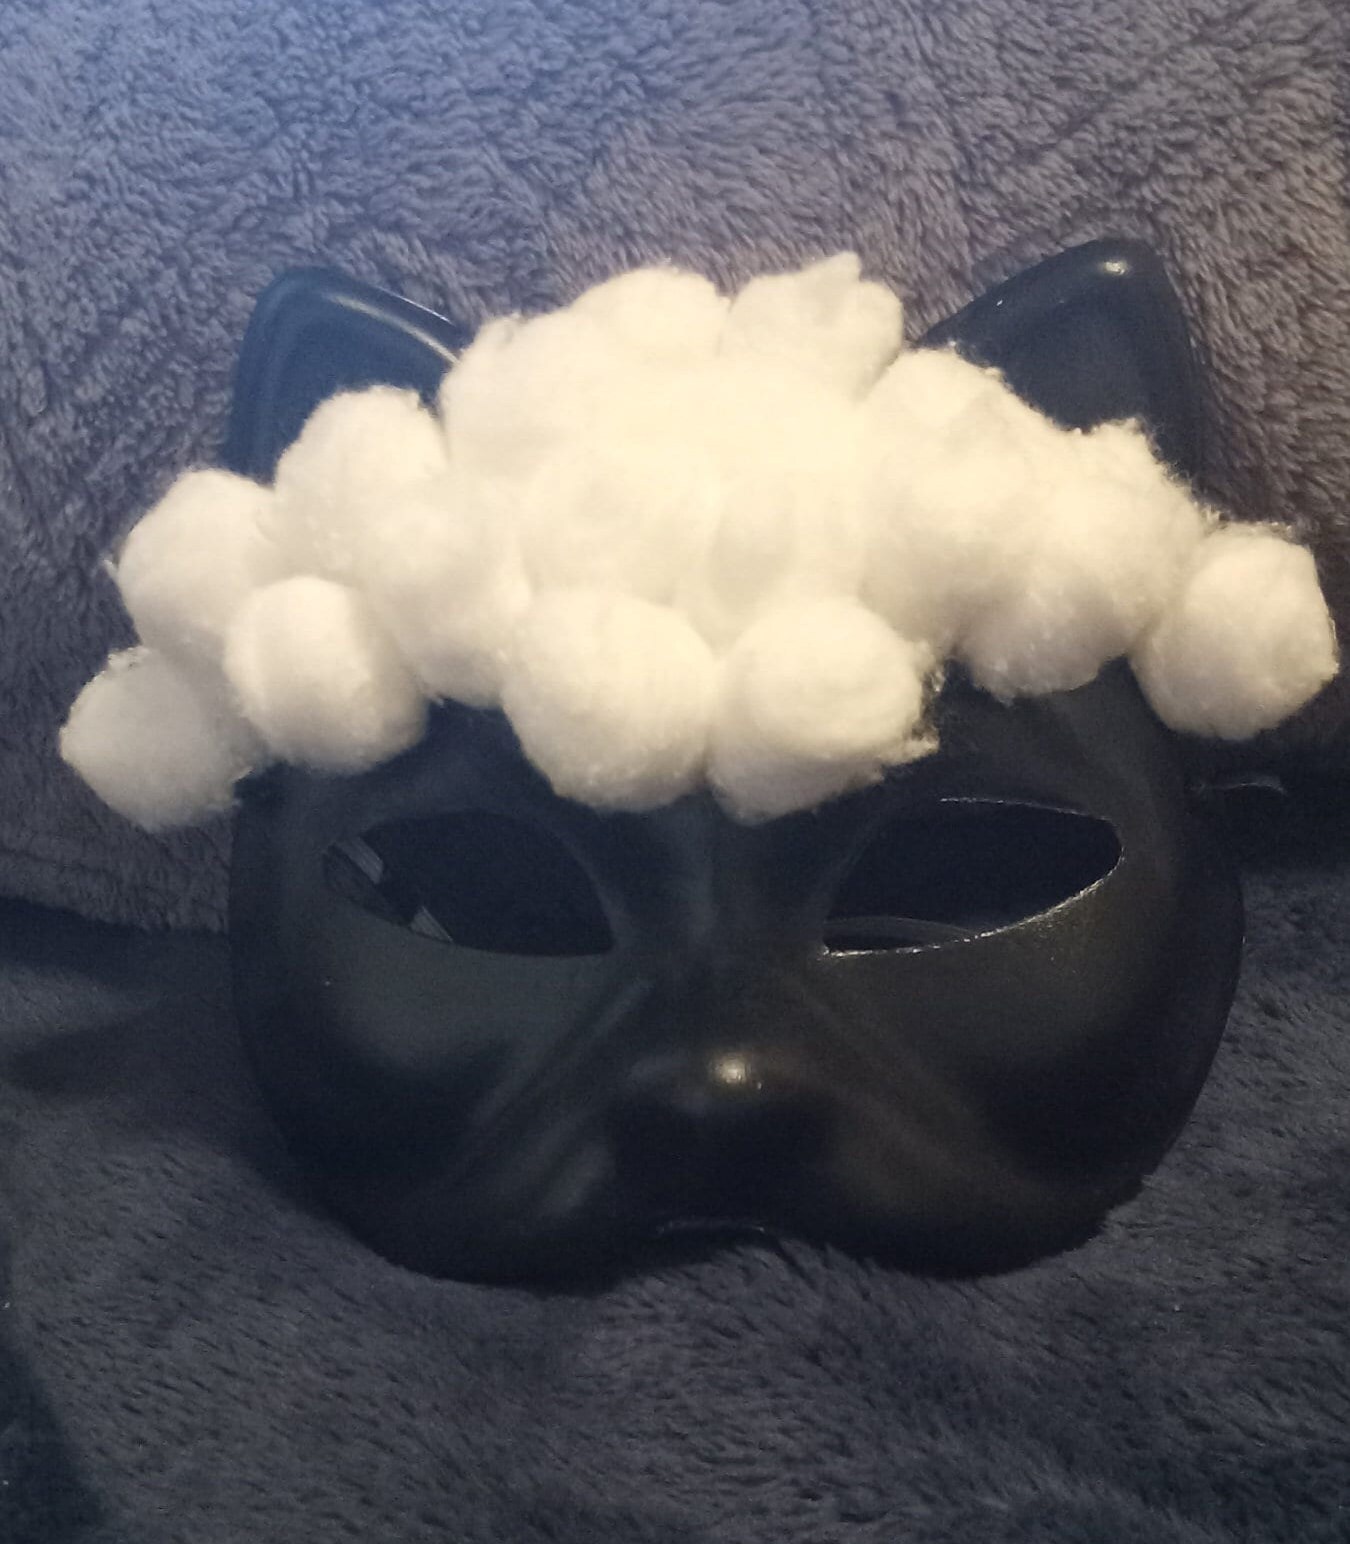 Therian mask - shop - magdalinen